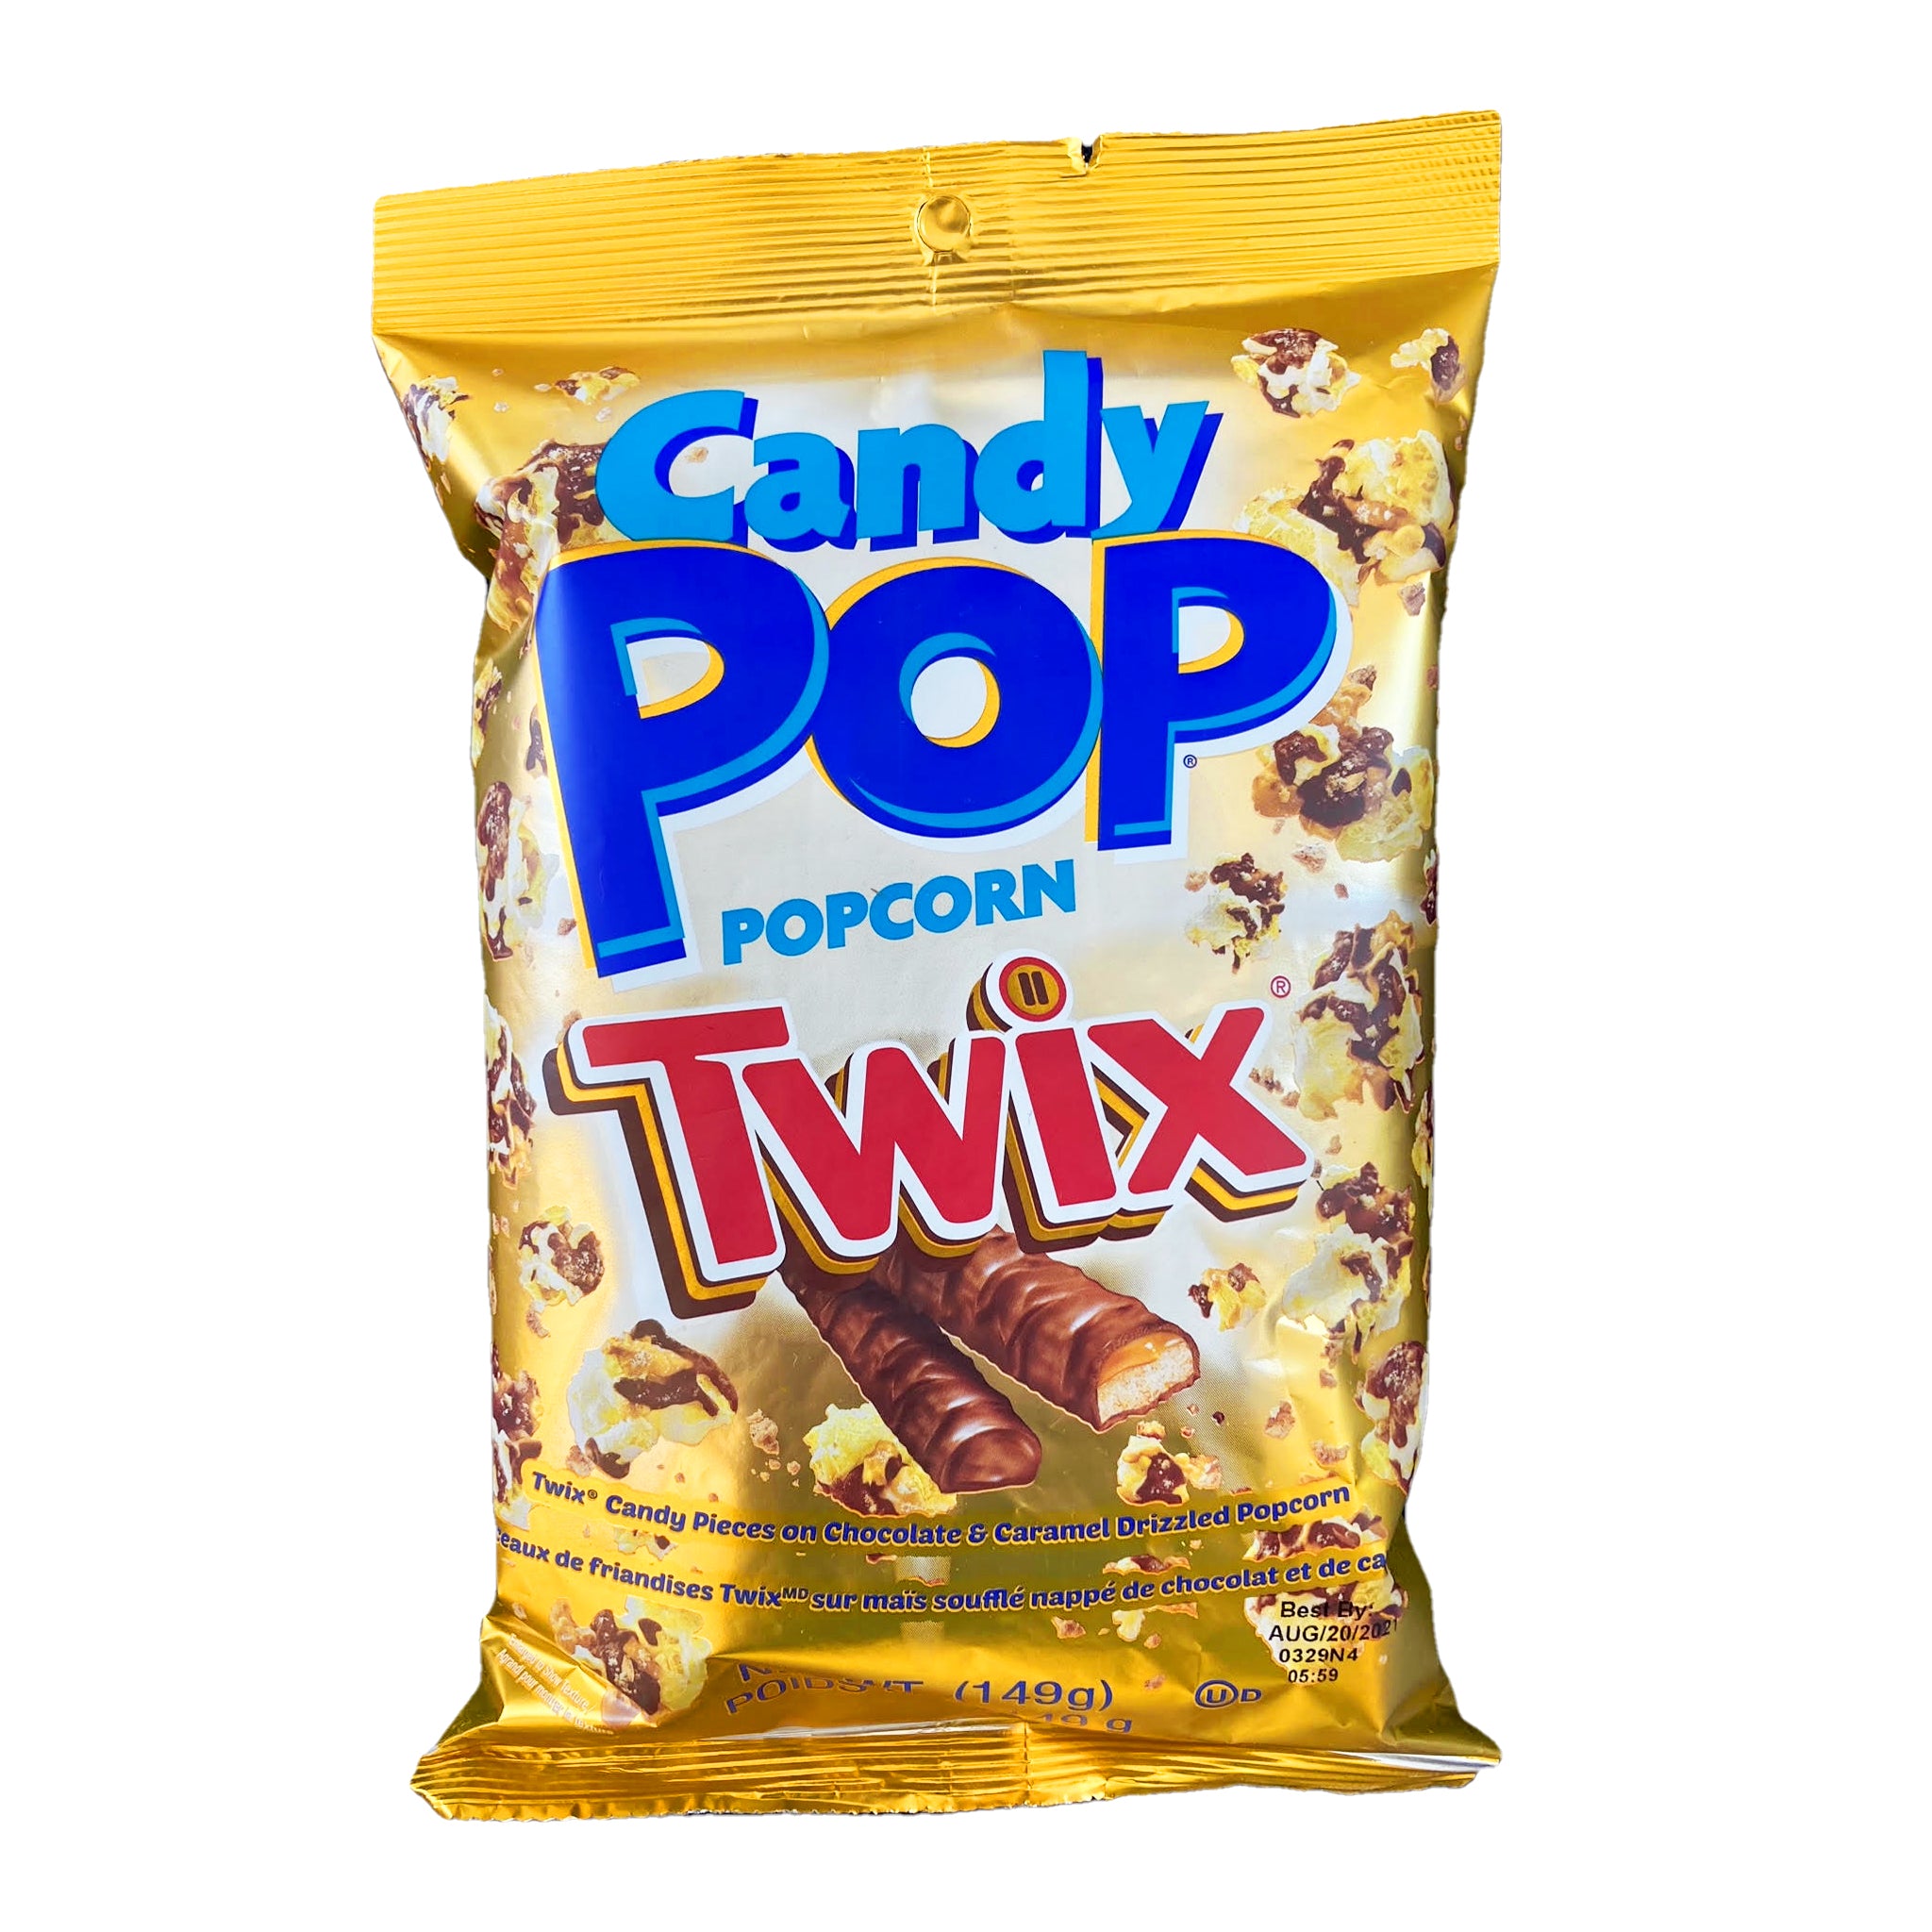 Popcorn Candy Pop Twix פופקורן מותגים טוויקס - טעימים